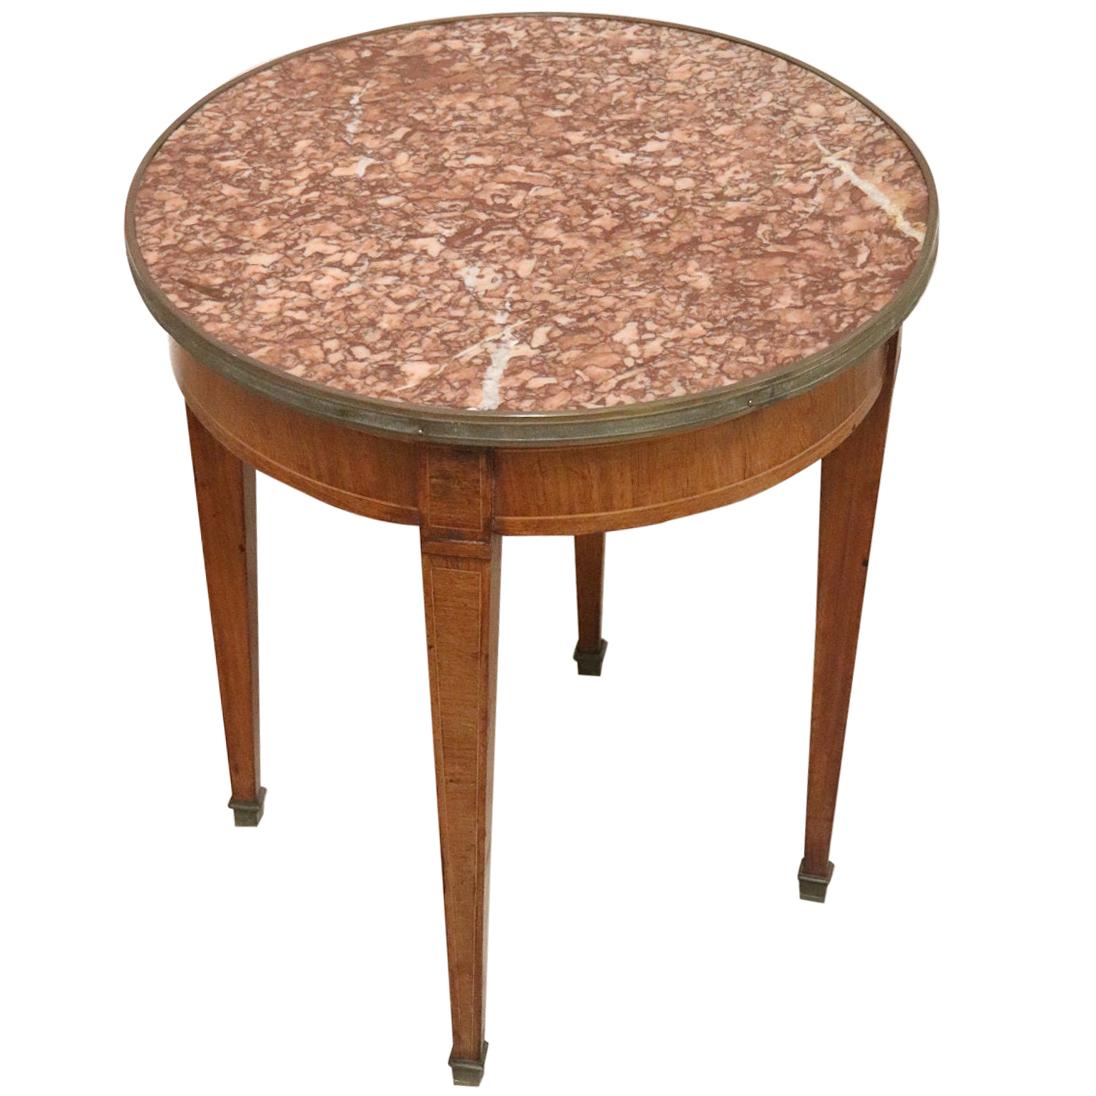 20th Century Italian Louis XVI Style Inlay Walnut Coffee Table or Side Table